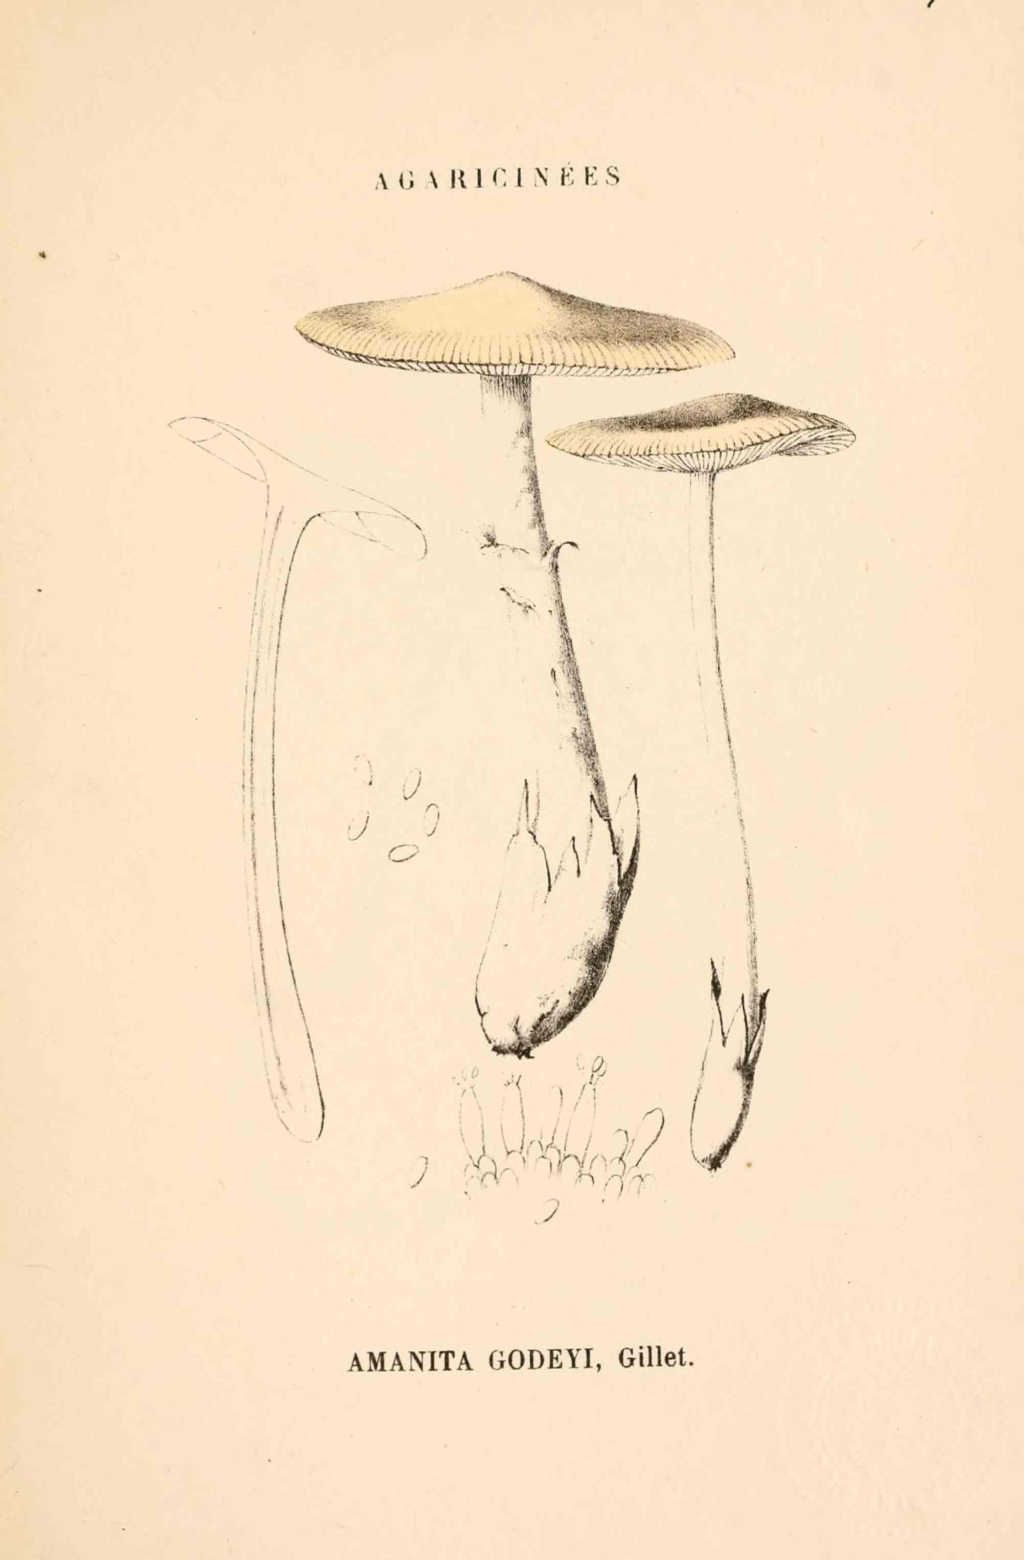 amanita godeyi - dessin-gravure couleur de champignon